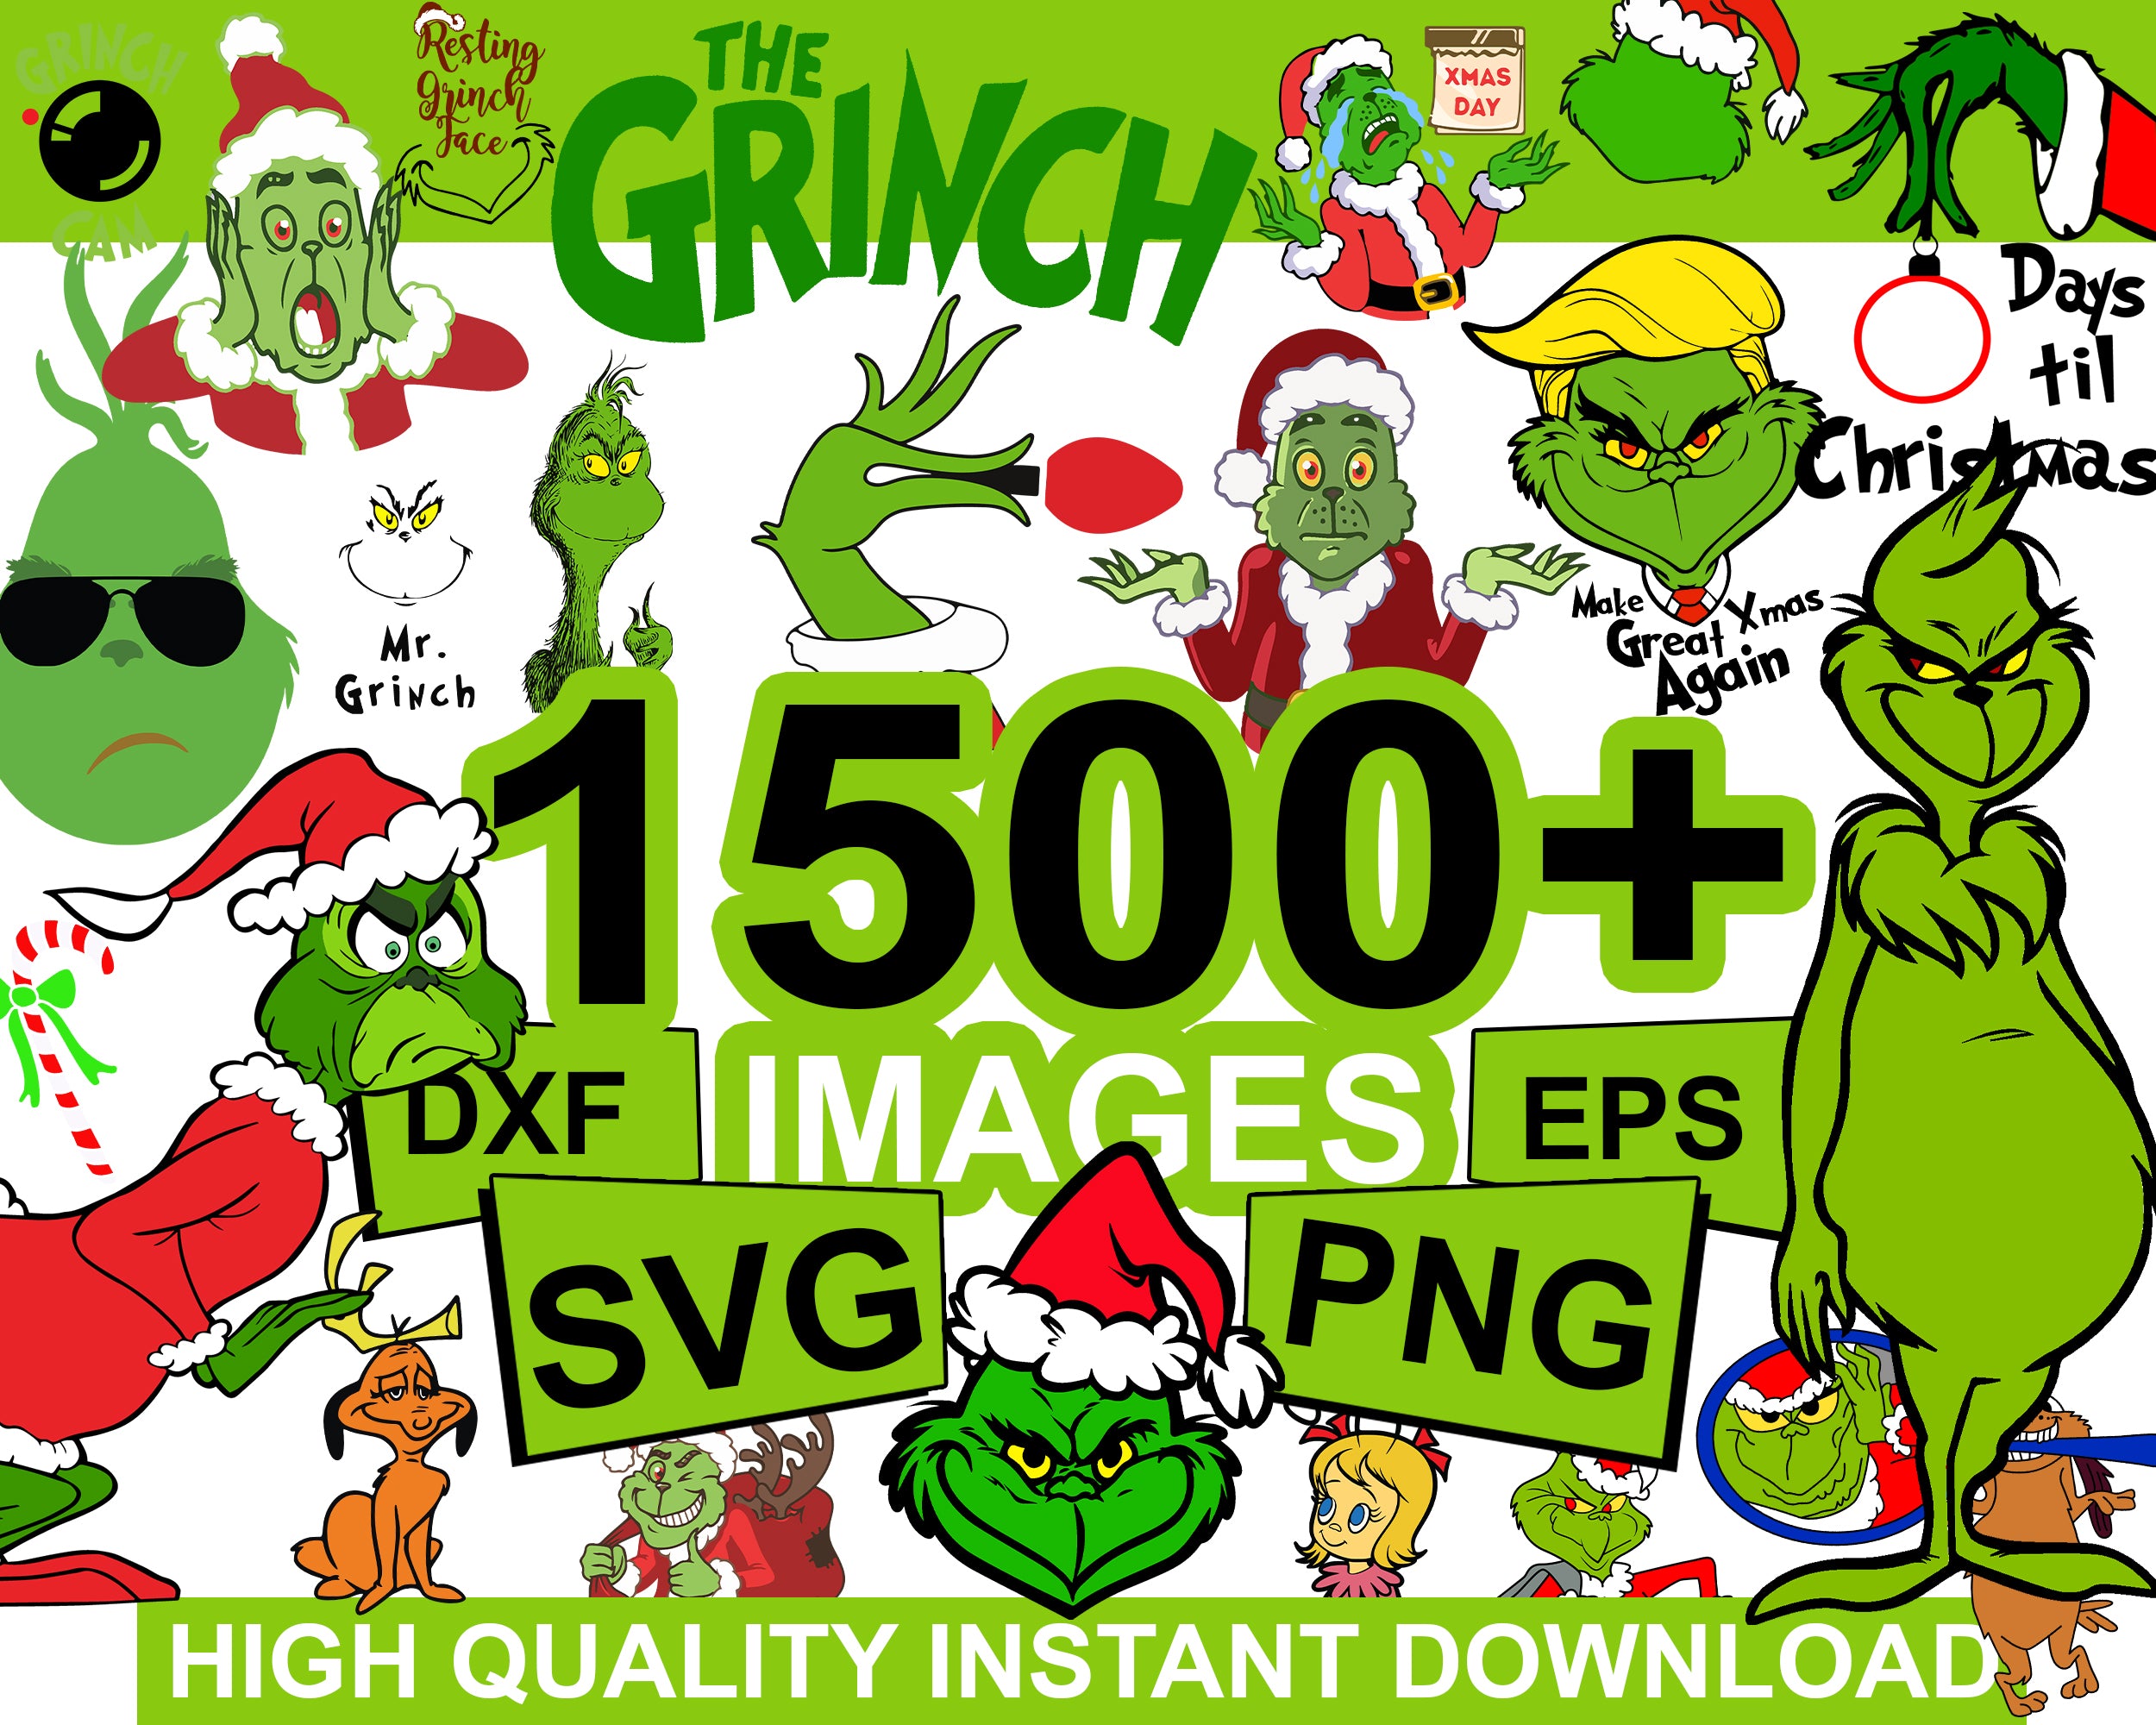 1500+ Grinch Bundle SVG, Grinch SVG, Grinch Cutting Image, Christmas Grinch svg